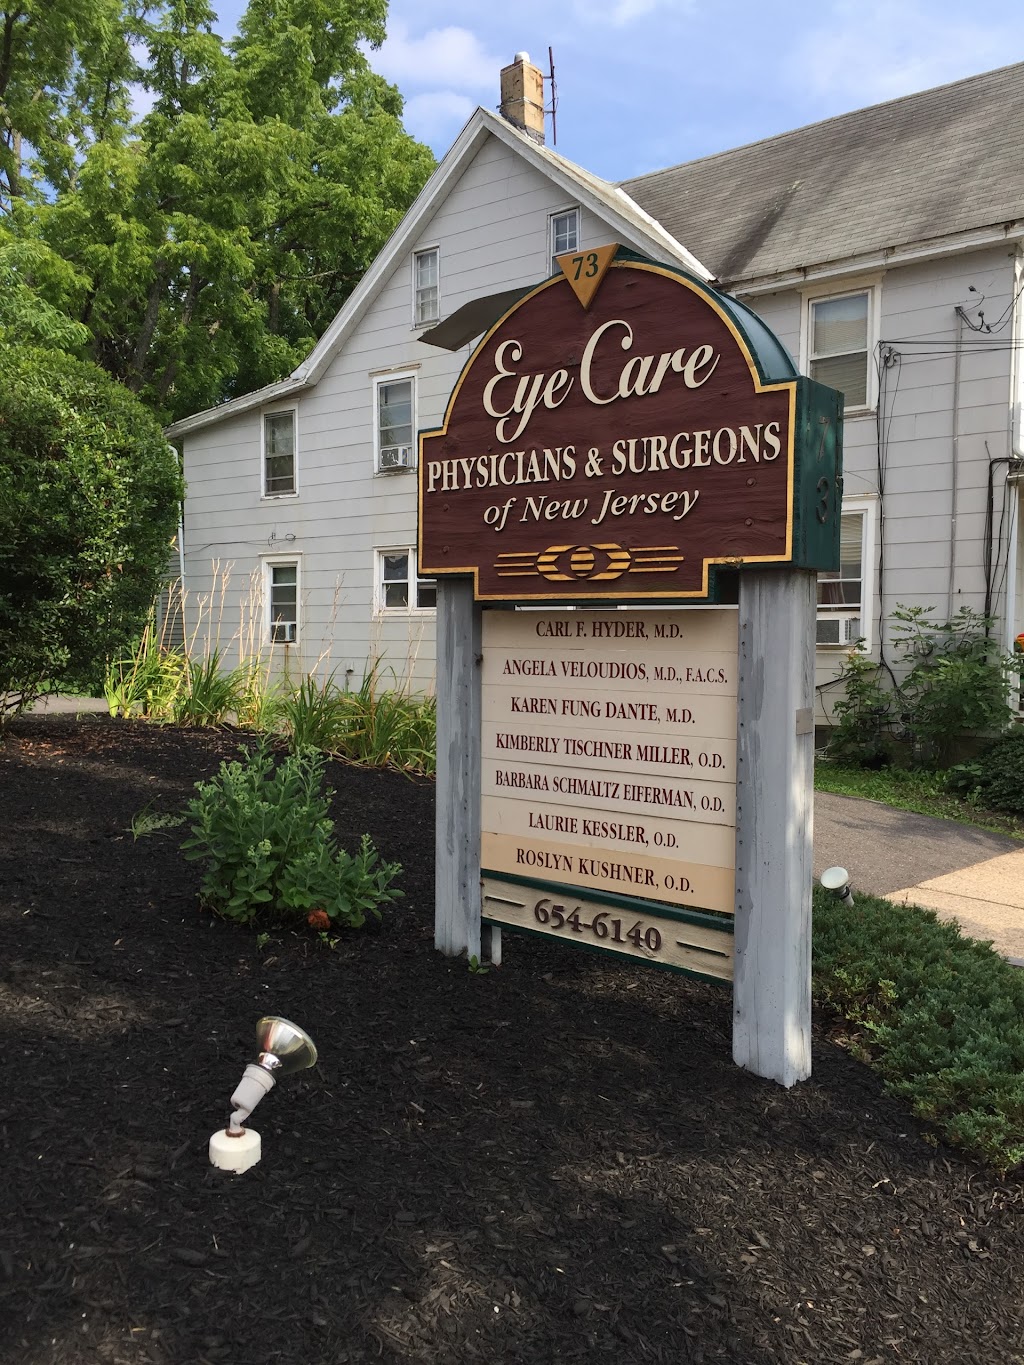 Eye Care Physicians & Surgeons: Delong Terry MD | 73 S Main St, Medford, NJ 08055 | Phone: (609) 654-6140